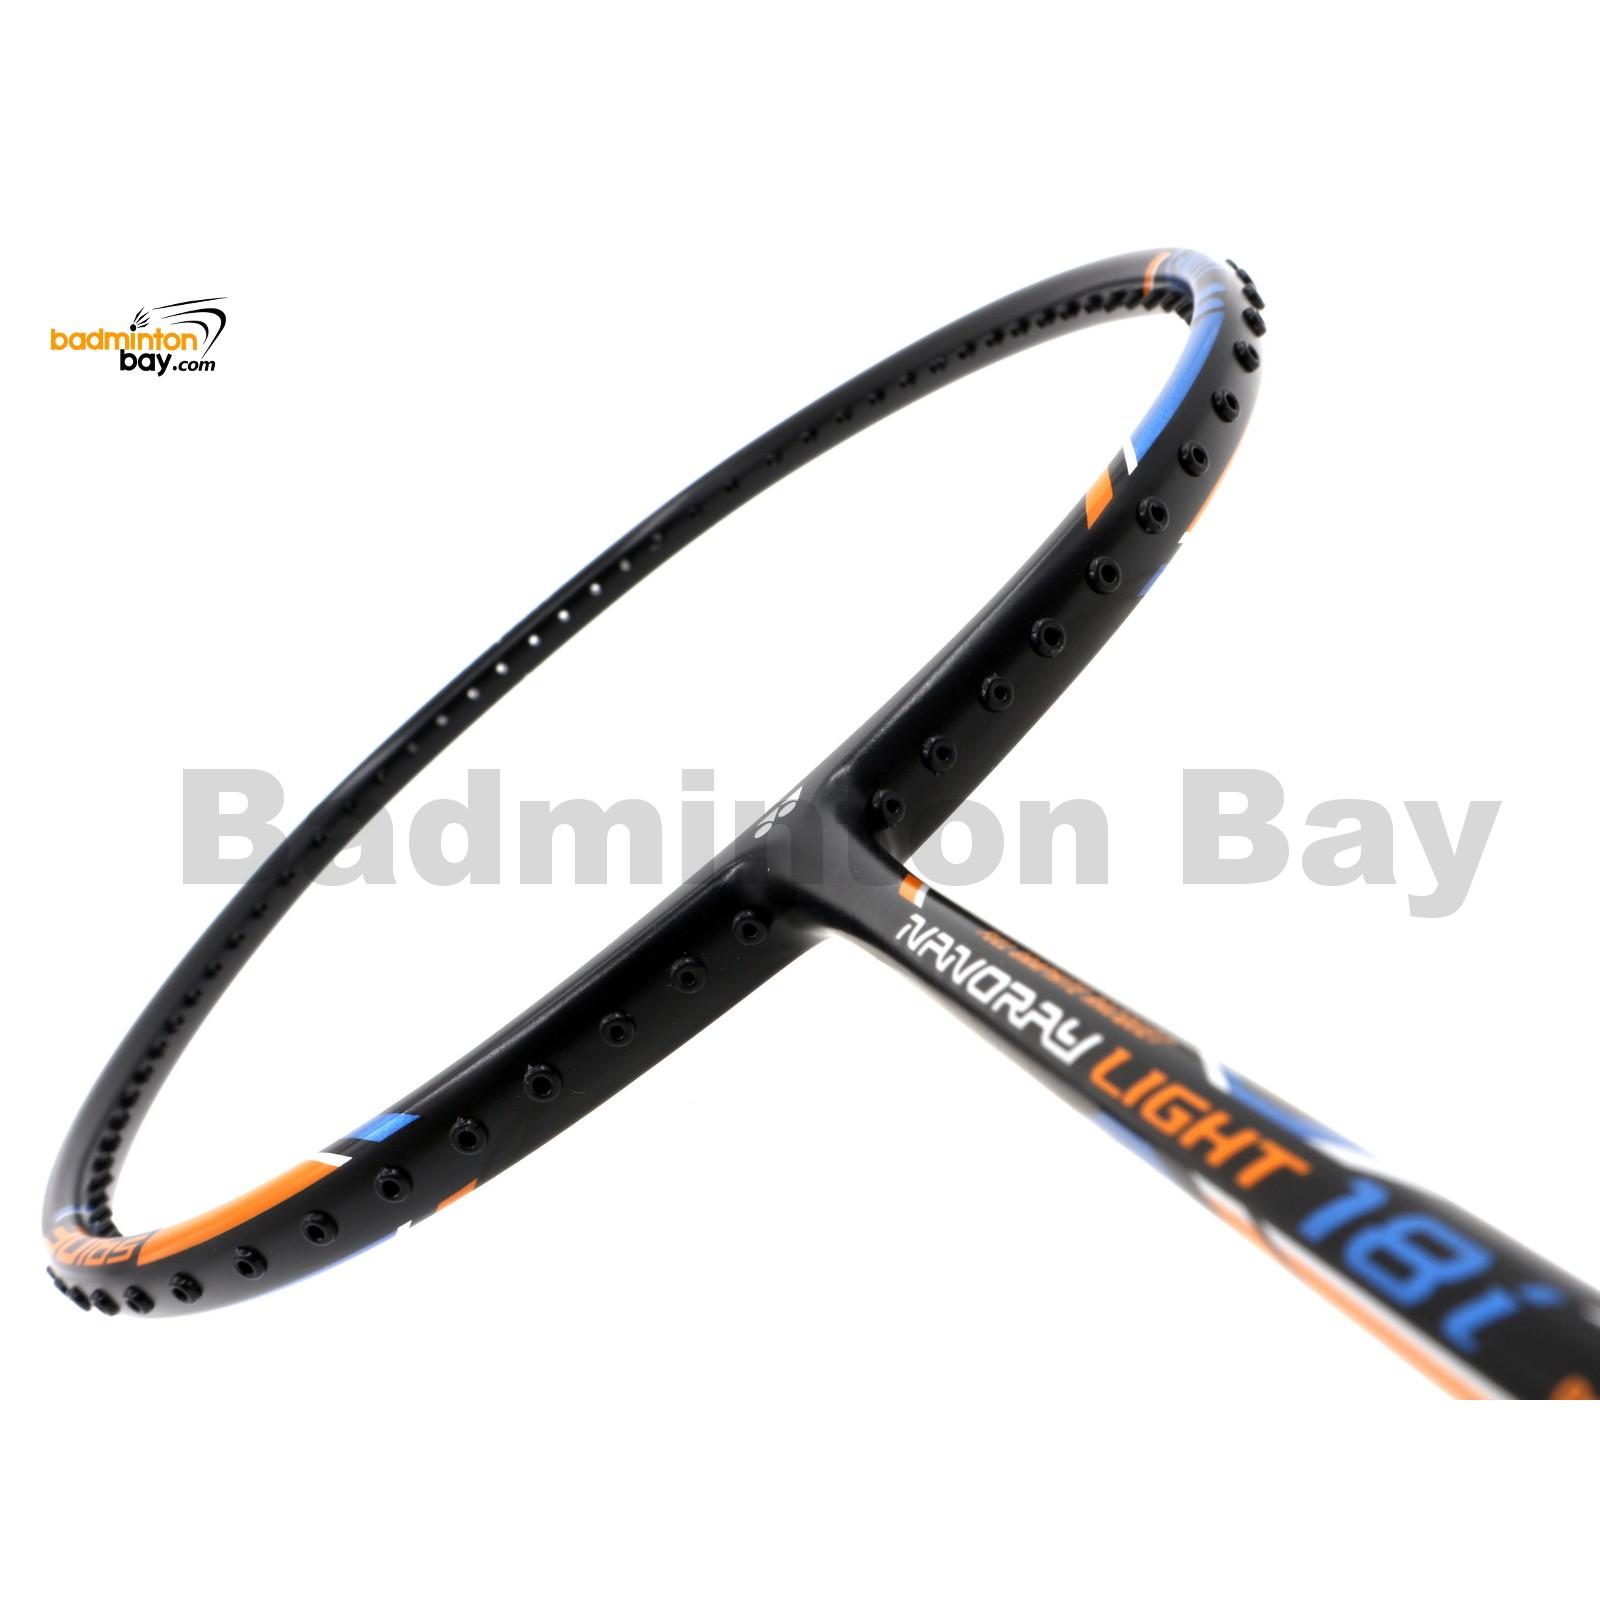 Black Yonex Nanoray Light 18i Graphite Badminton Racquet 77g, 30 lbs Tension 